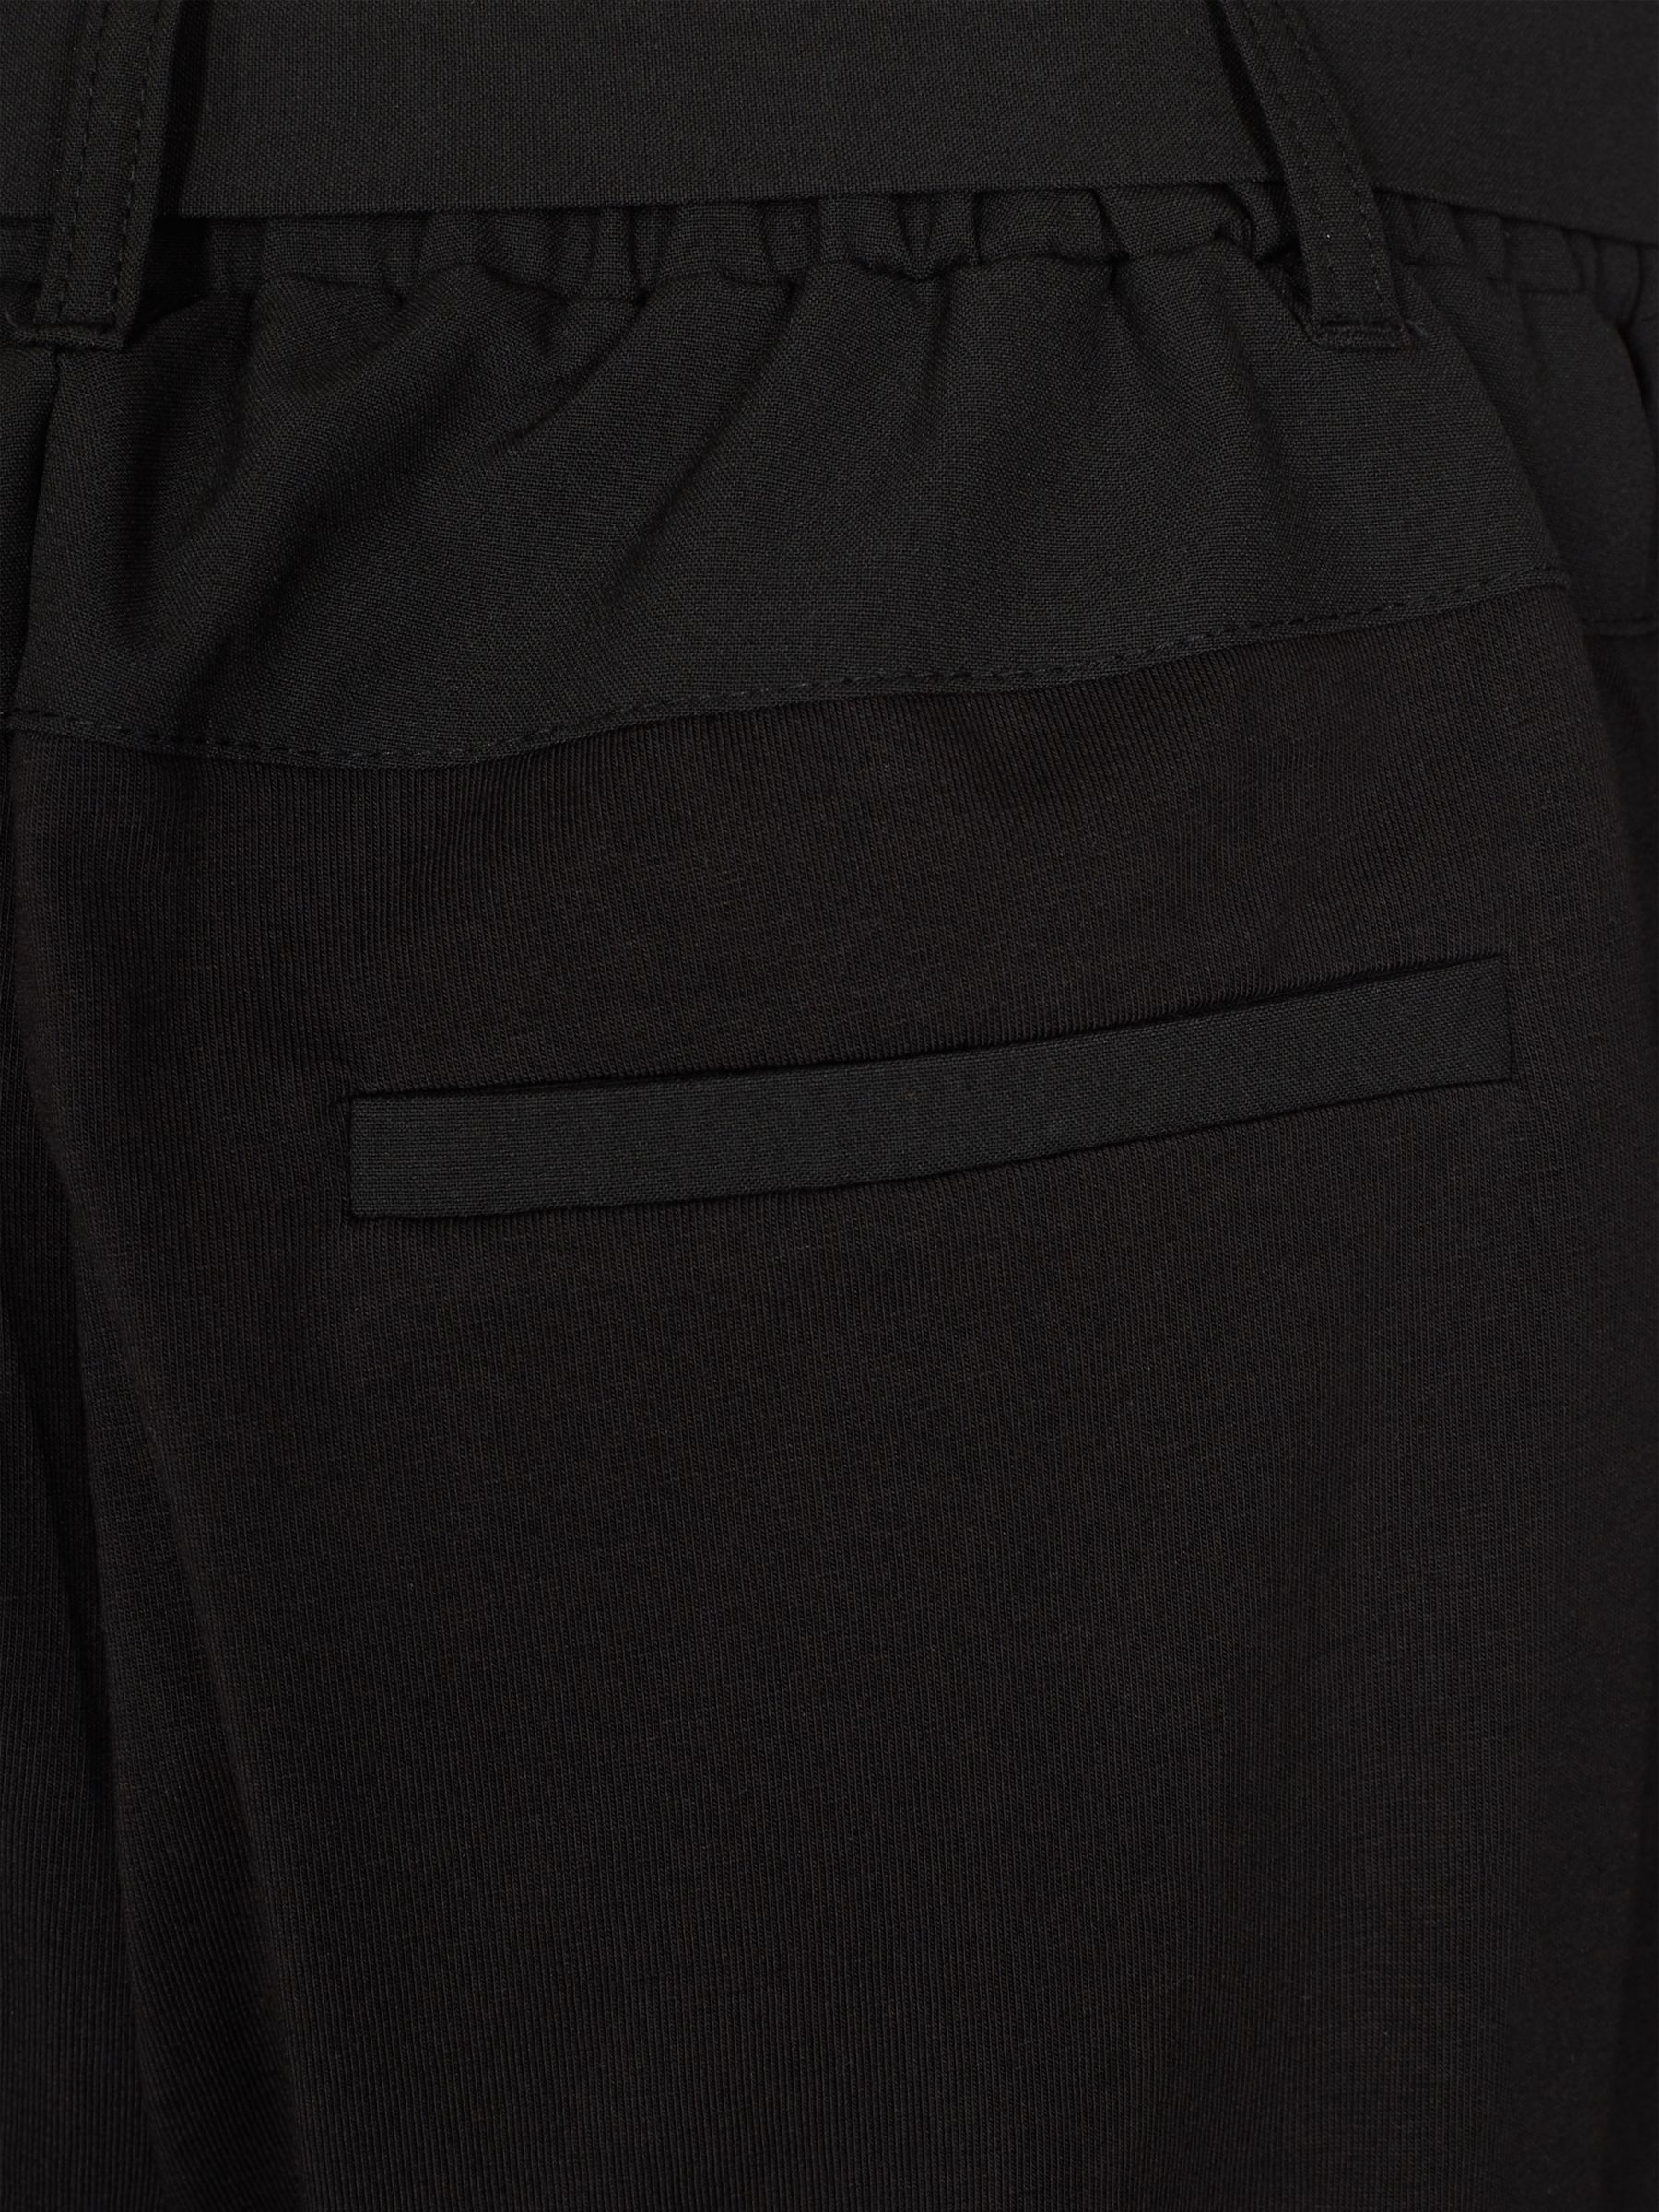 KAFFE Jillian Belted Trousers, Black Deep at John Lewis & Partners